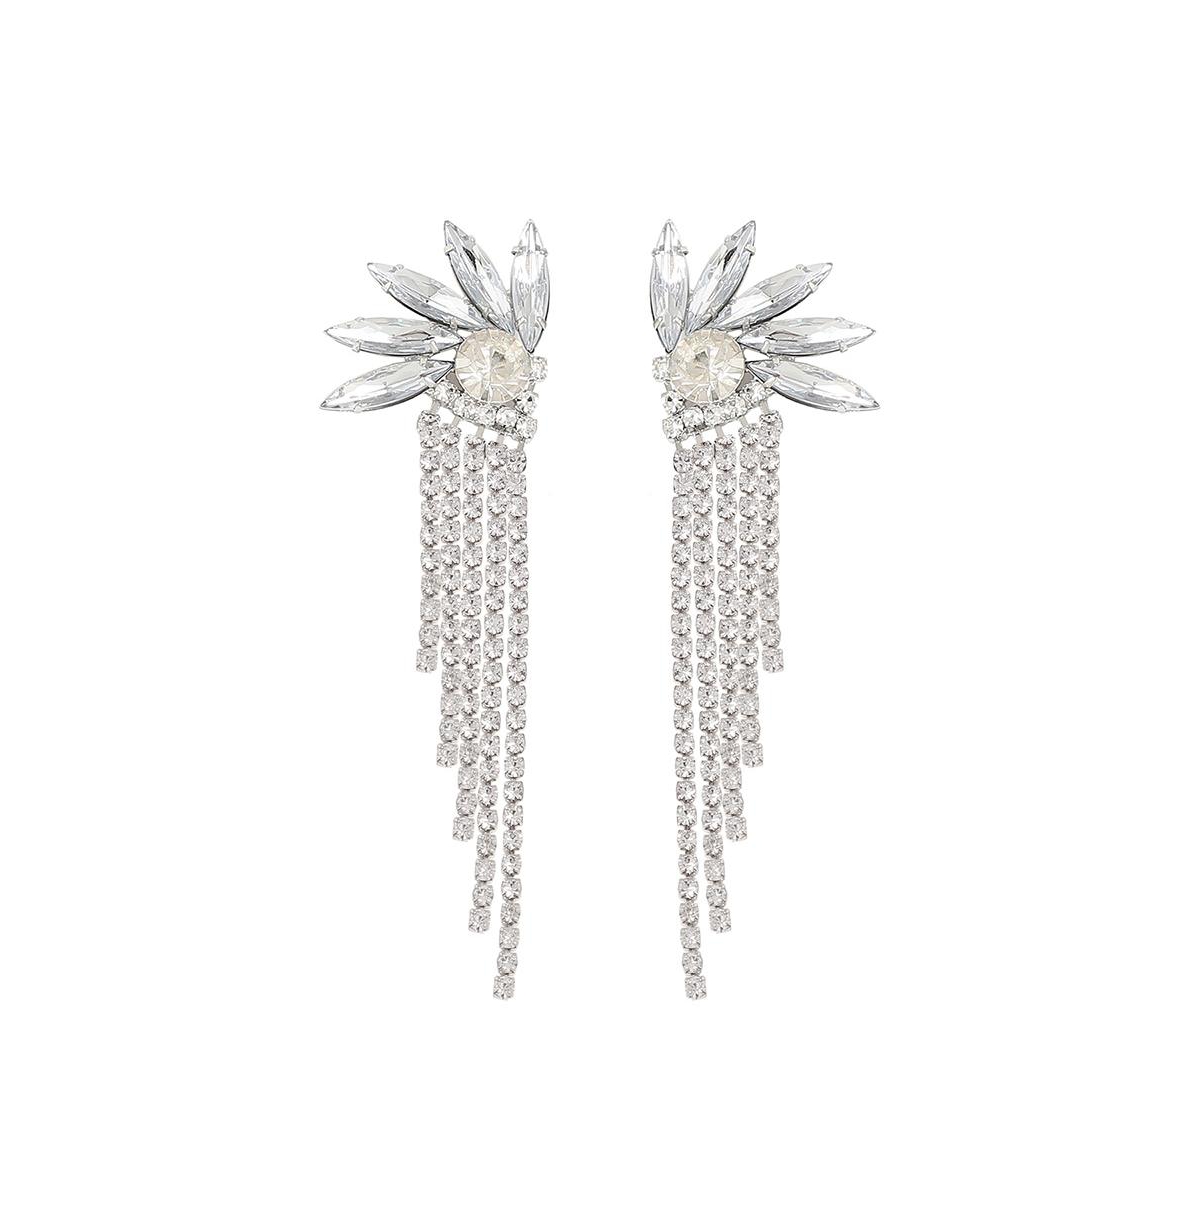 Sohi Women's Silver Bling Drop Earrings